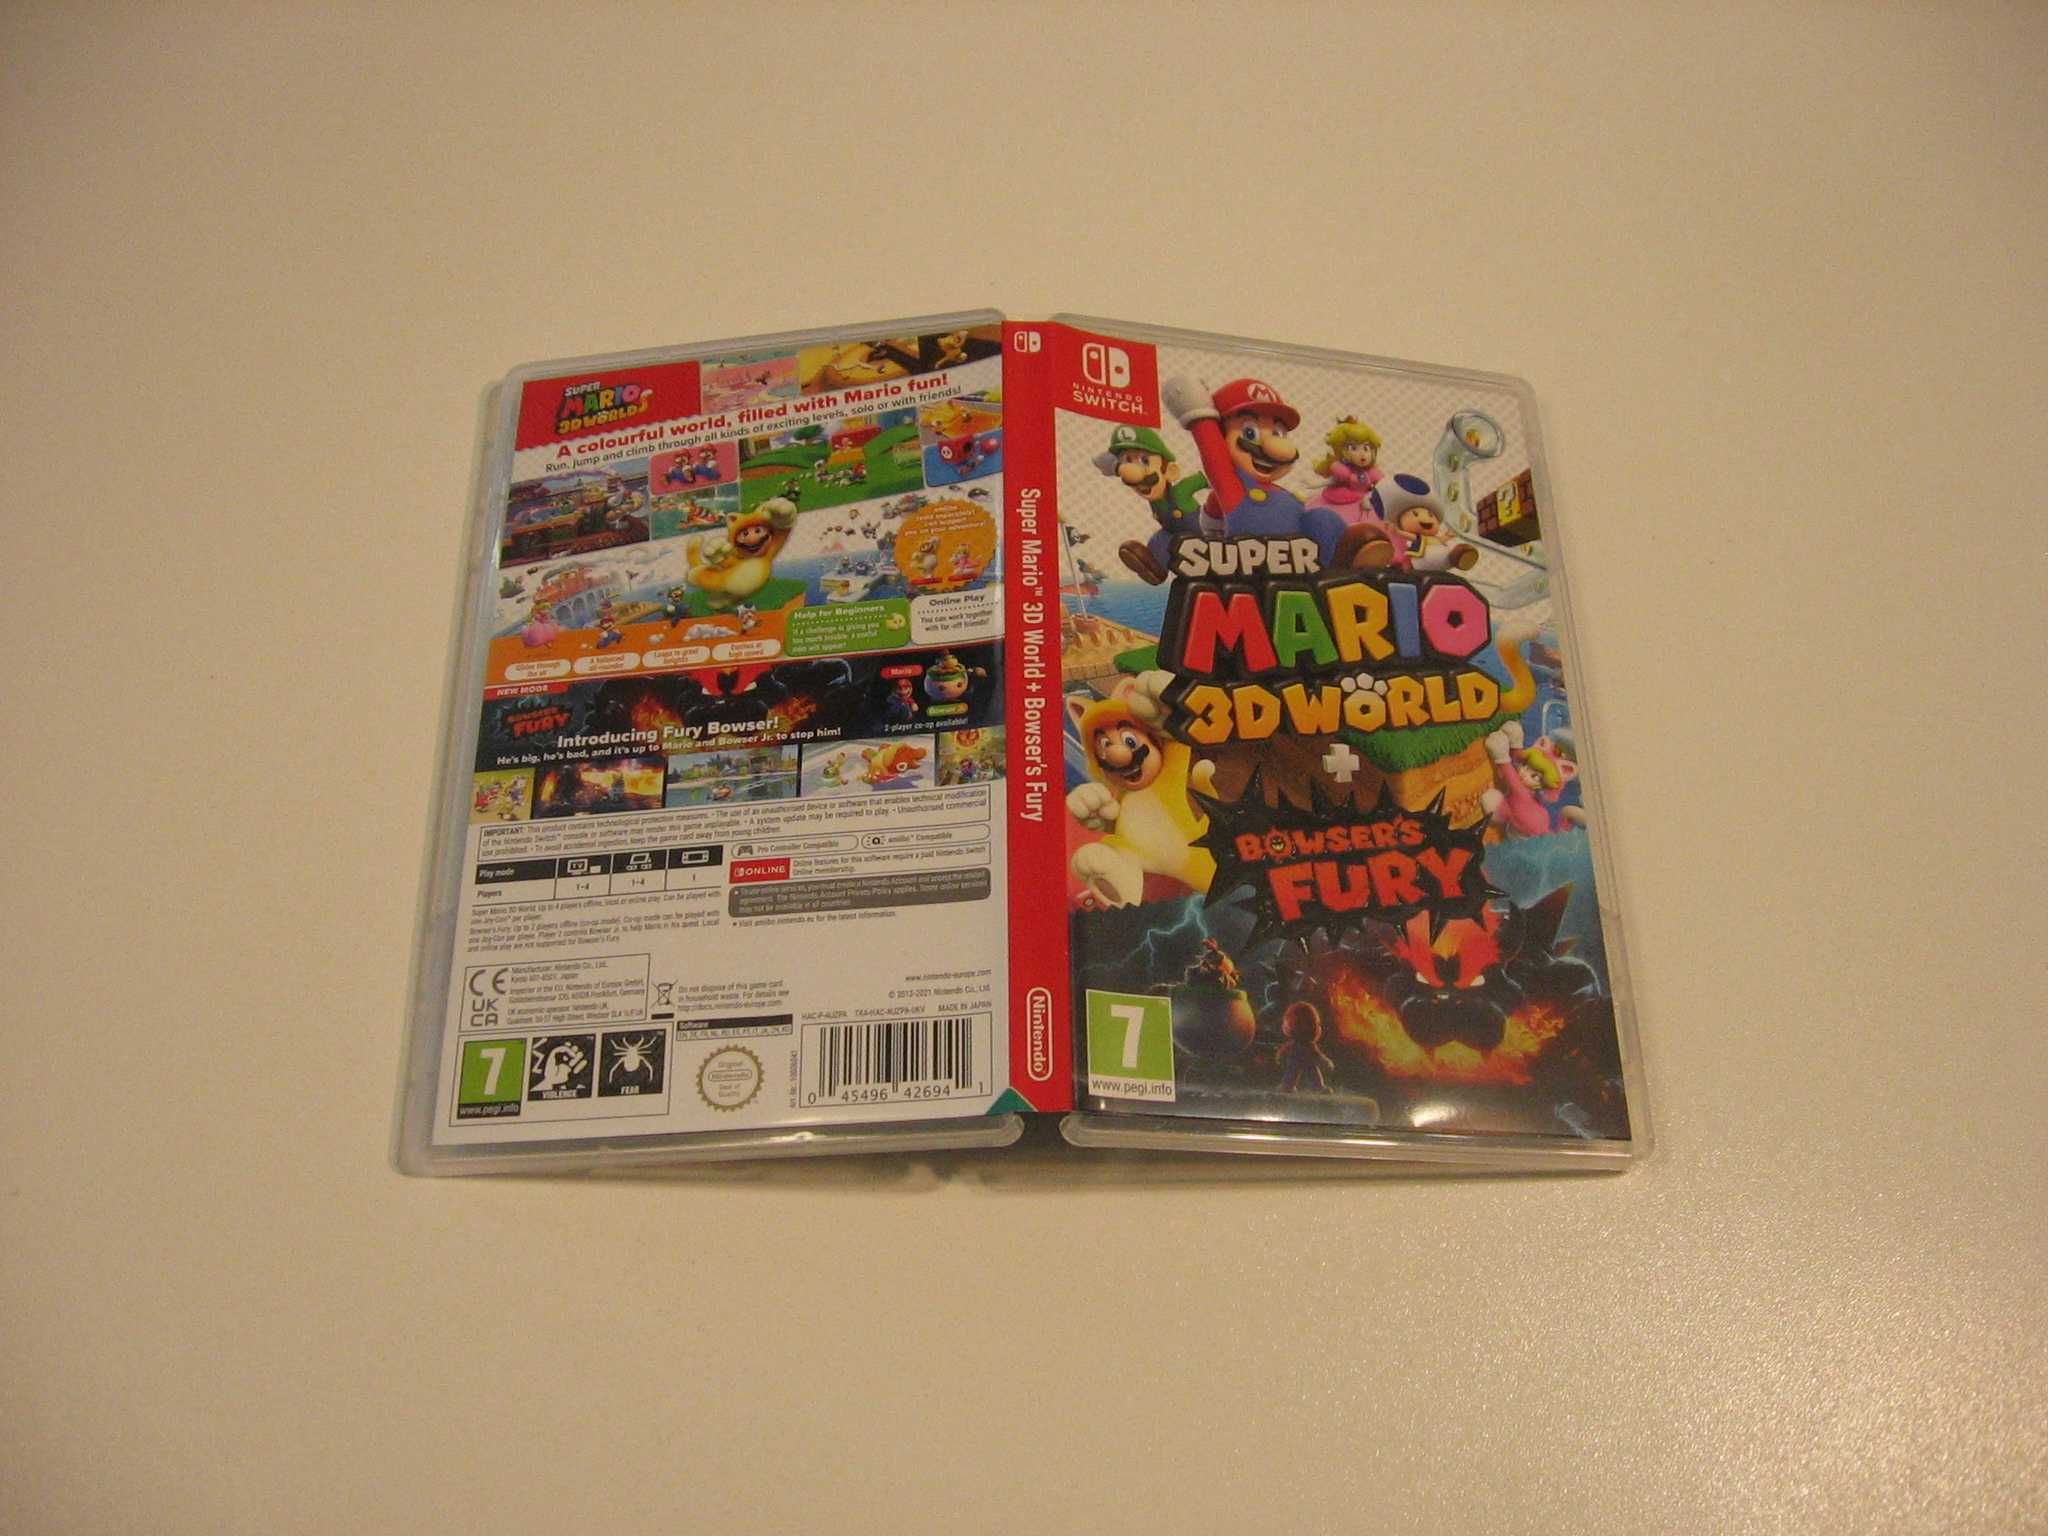 Super Mario 3D World Browsers Fury GRA Nintendo Switch - Opole 2697